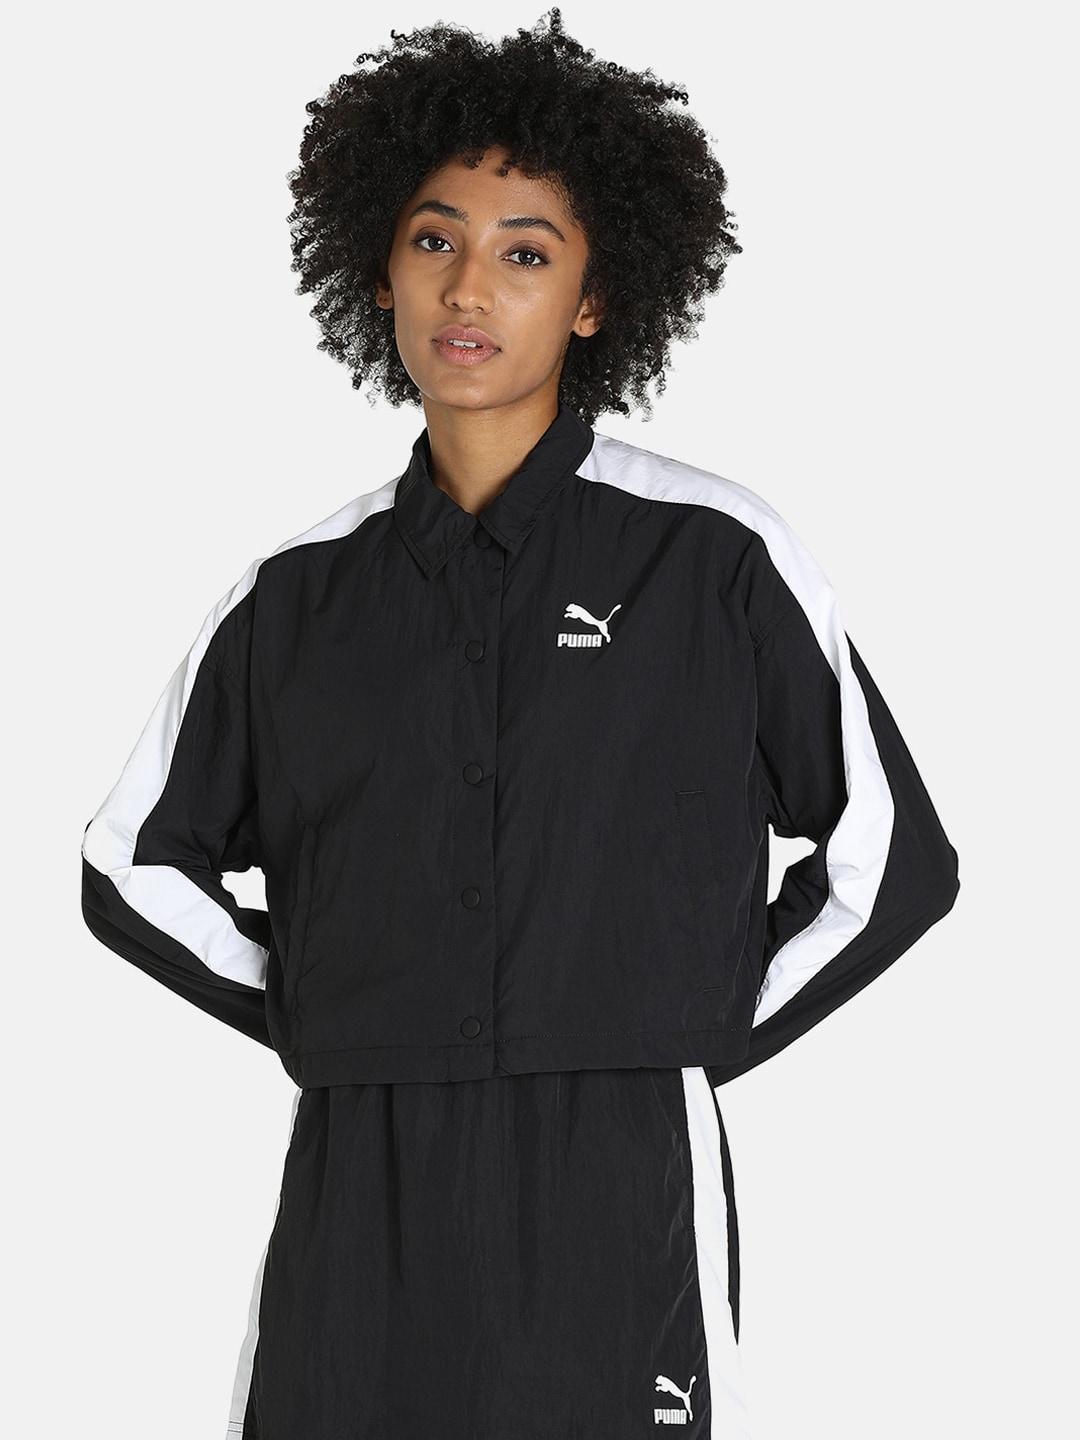 puma-women-black-&-white-colorblocked-jackets